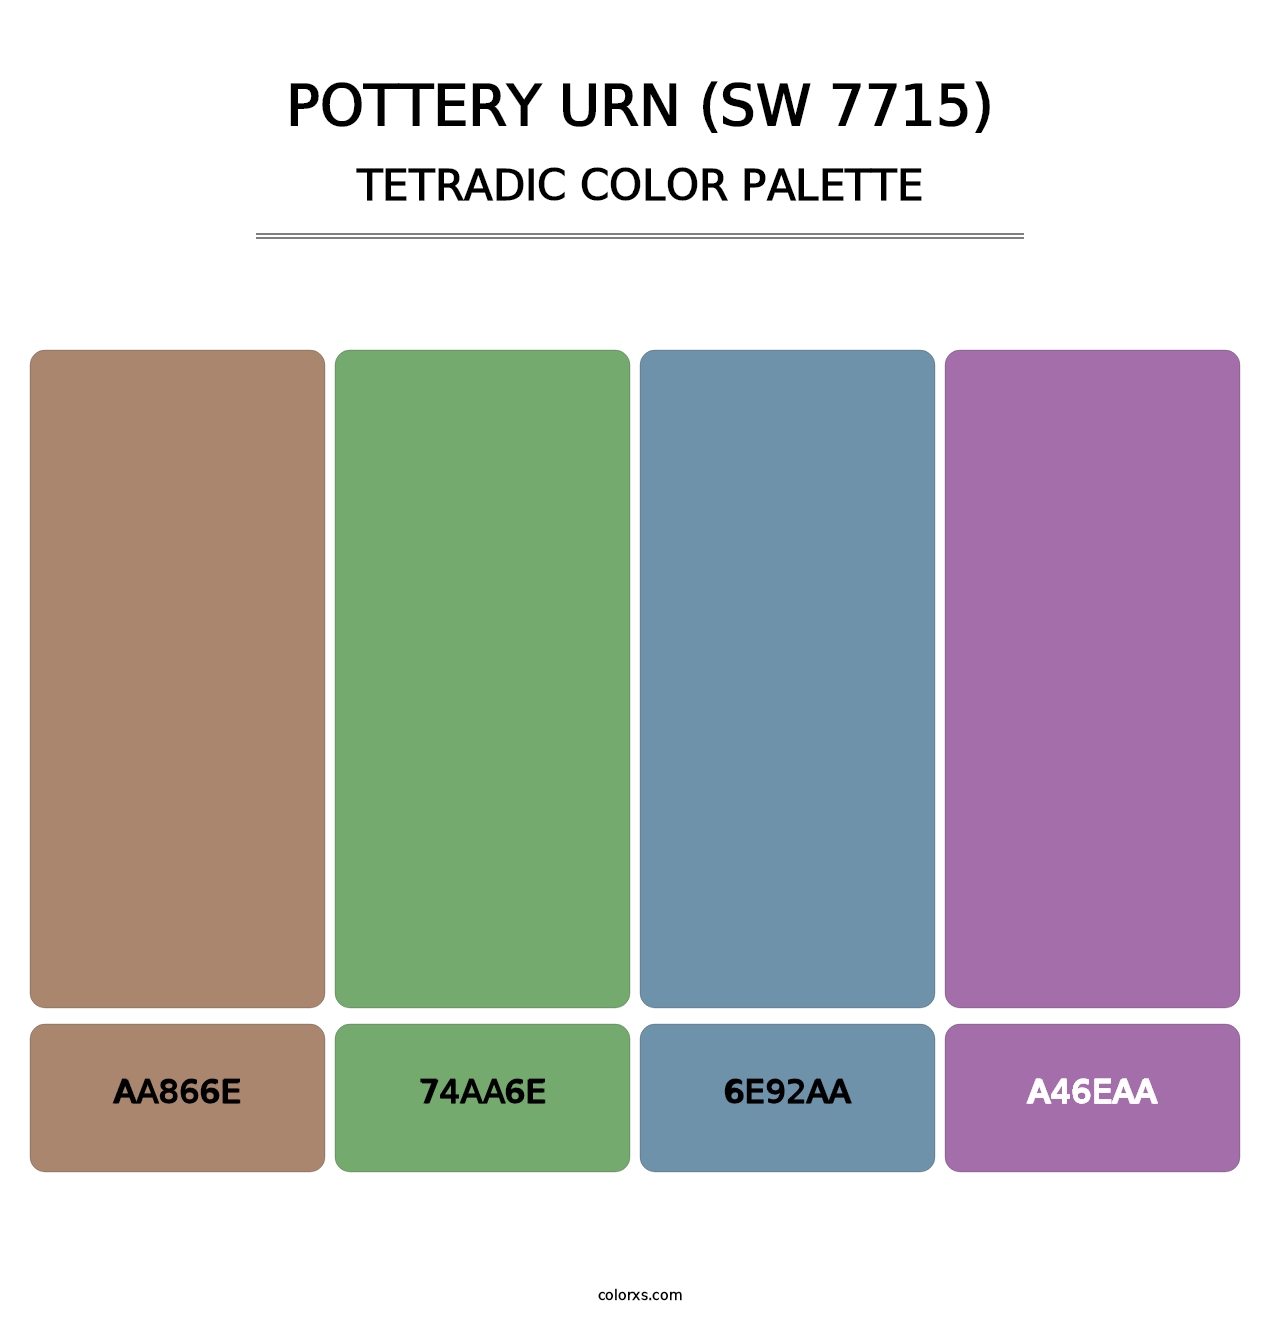 Pottery Urn (SW 7715) - Tetradic Color Palette